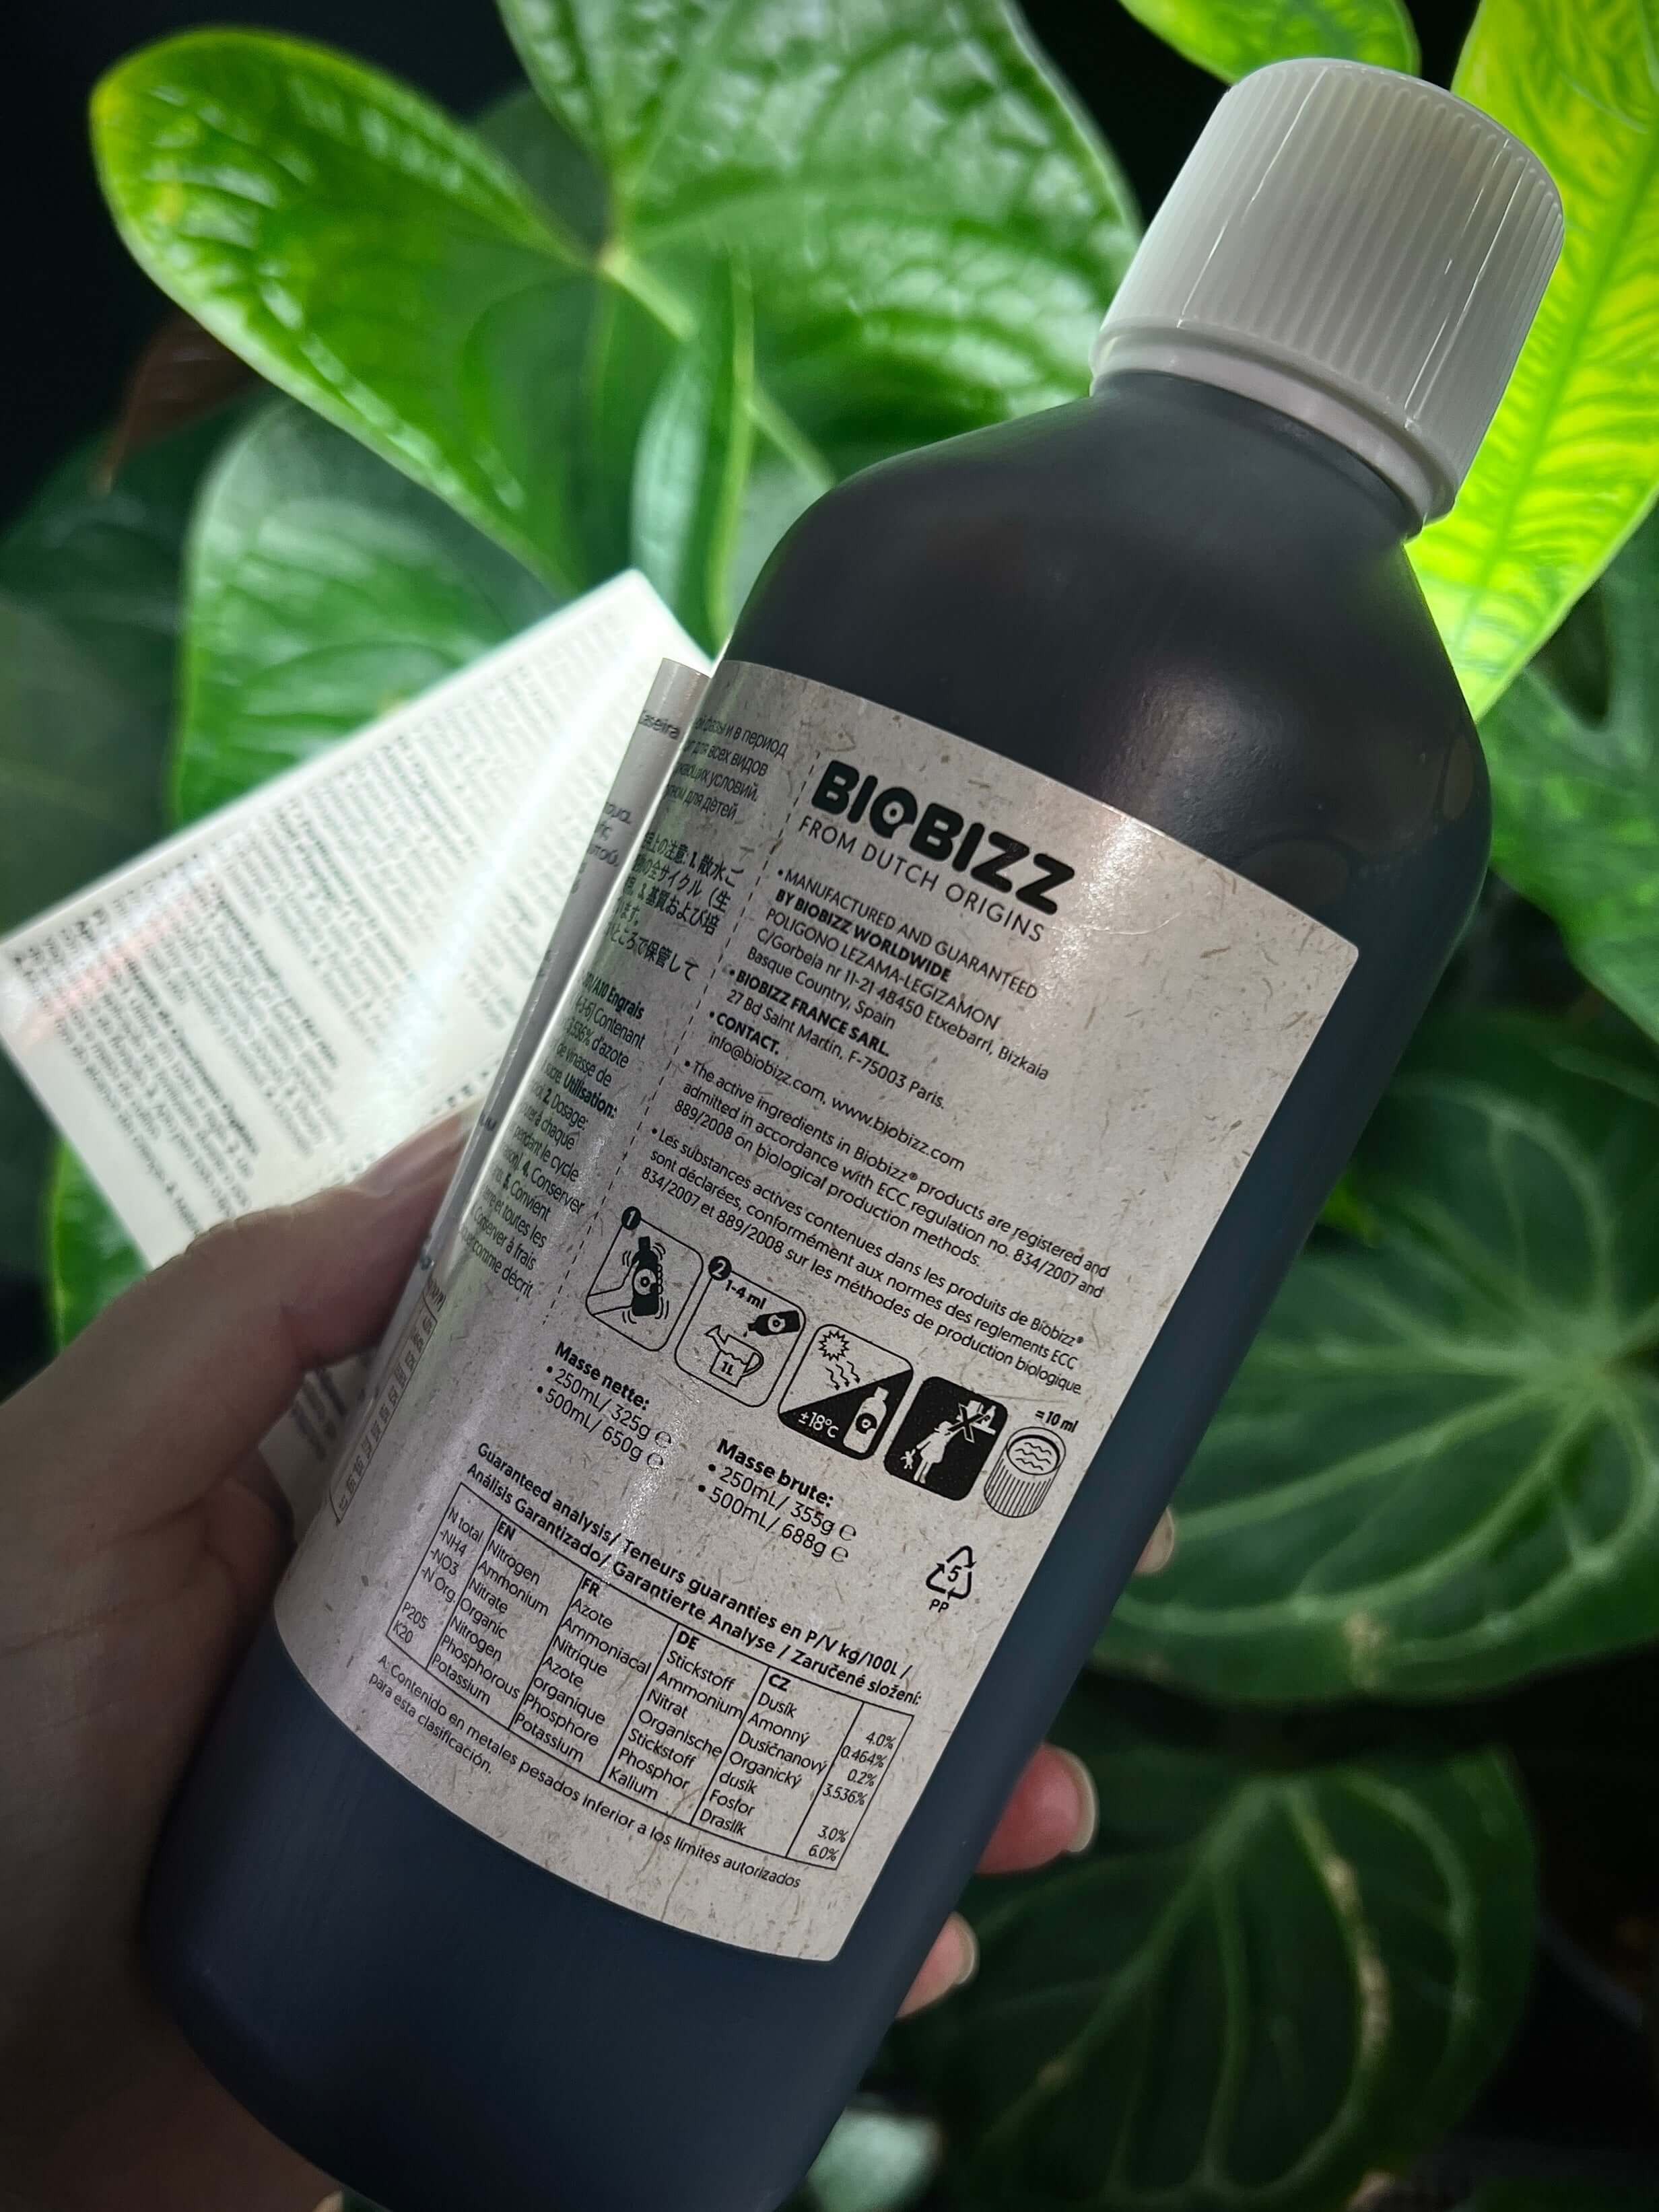 Biobizz Bio Grow - Fertilizer - SMUKHI